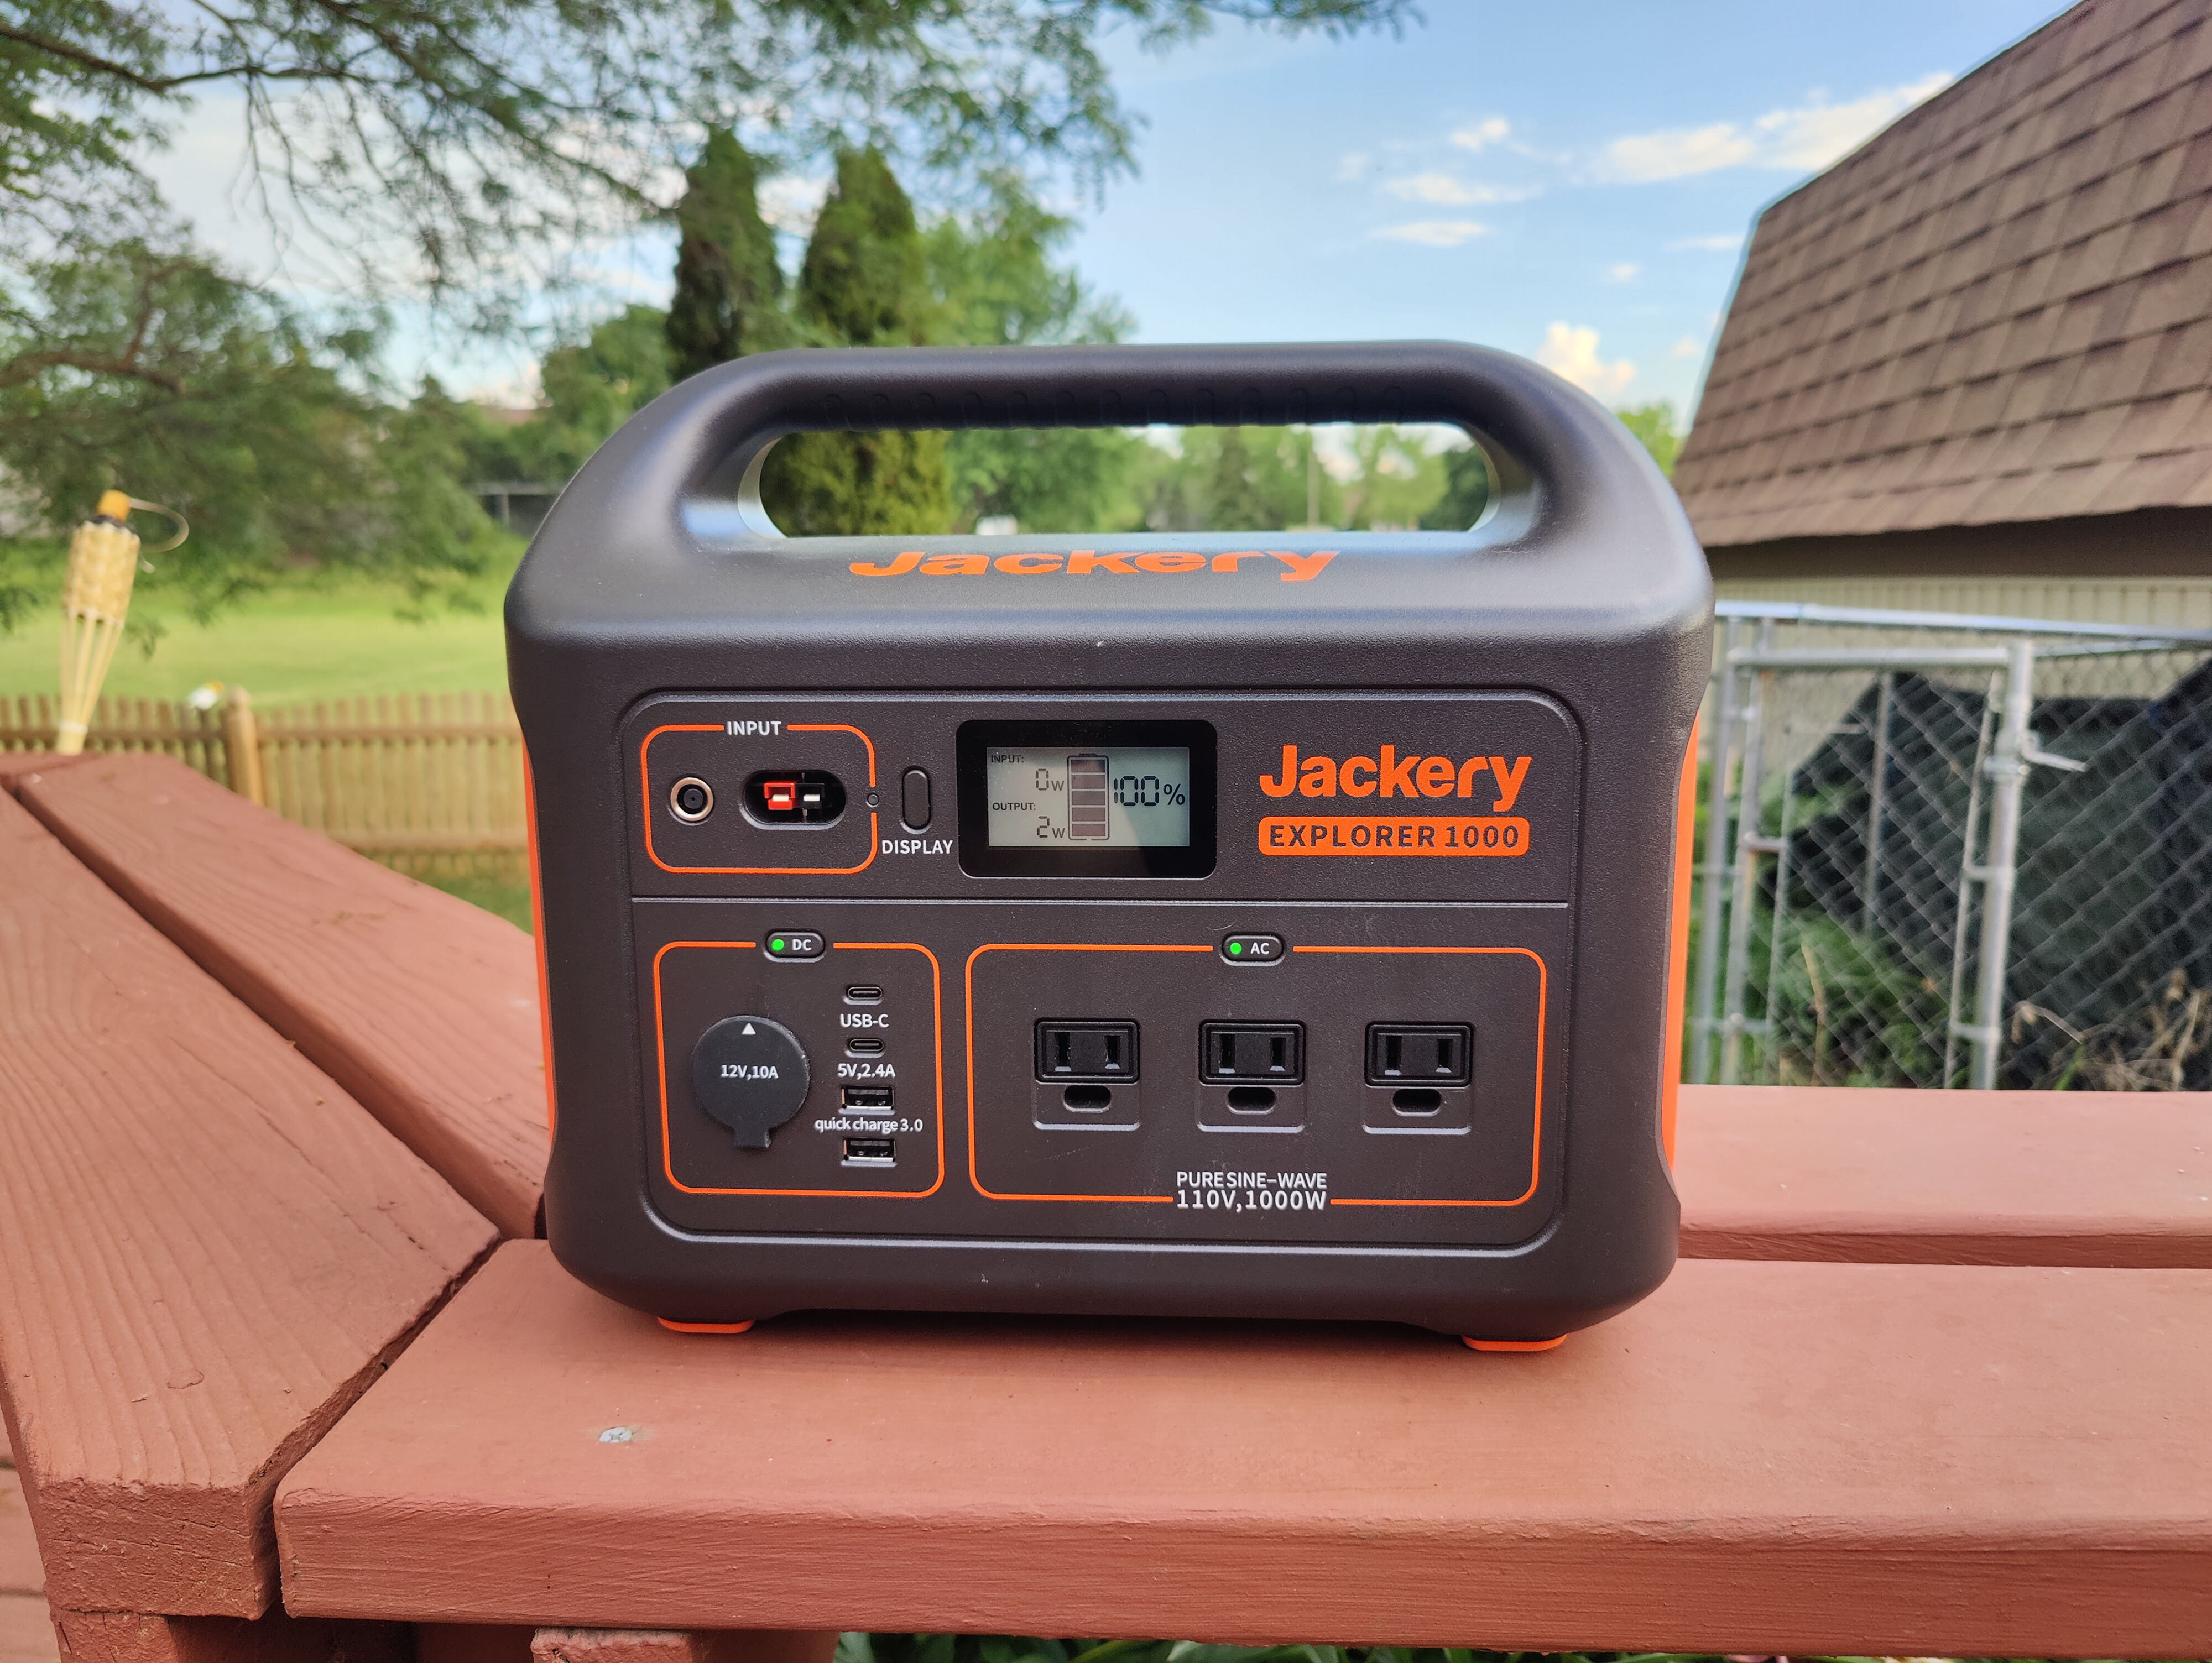 The Jackery Explorer 1000 basically gives you unlimited power.